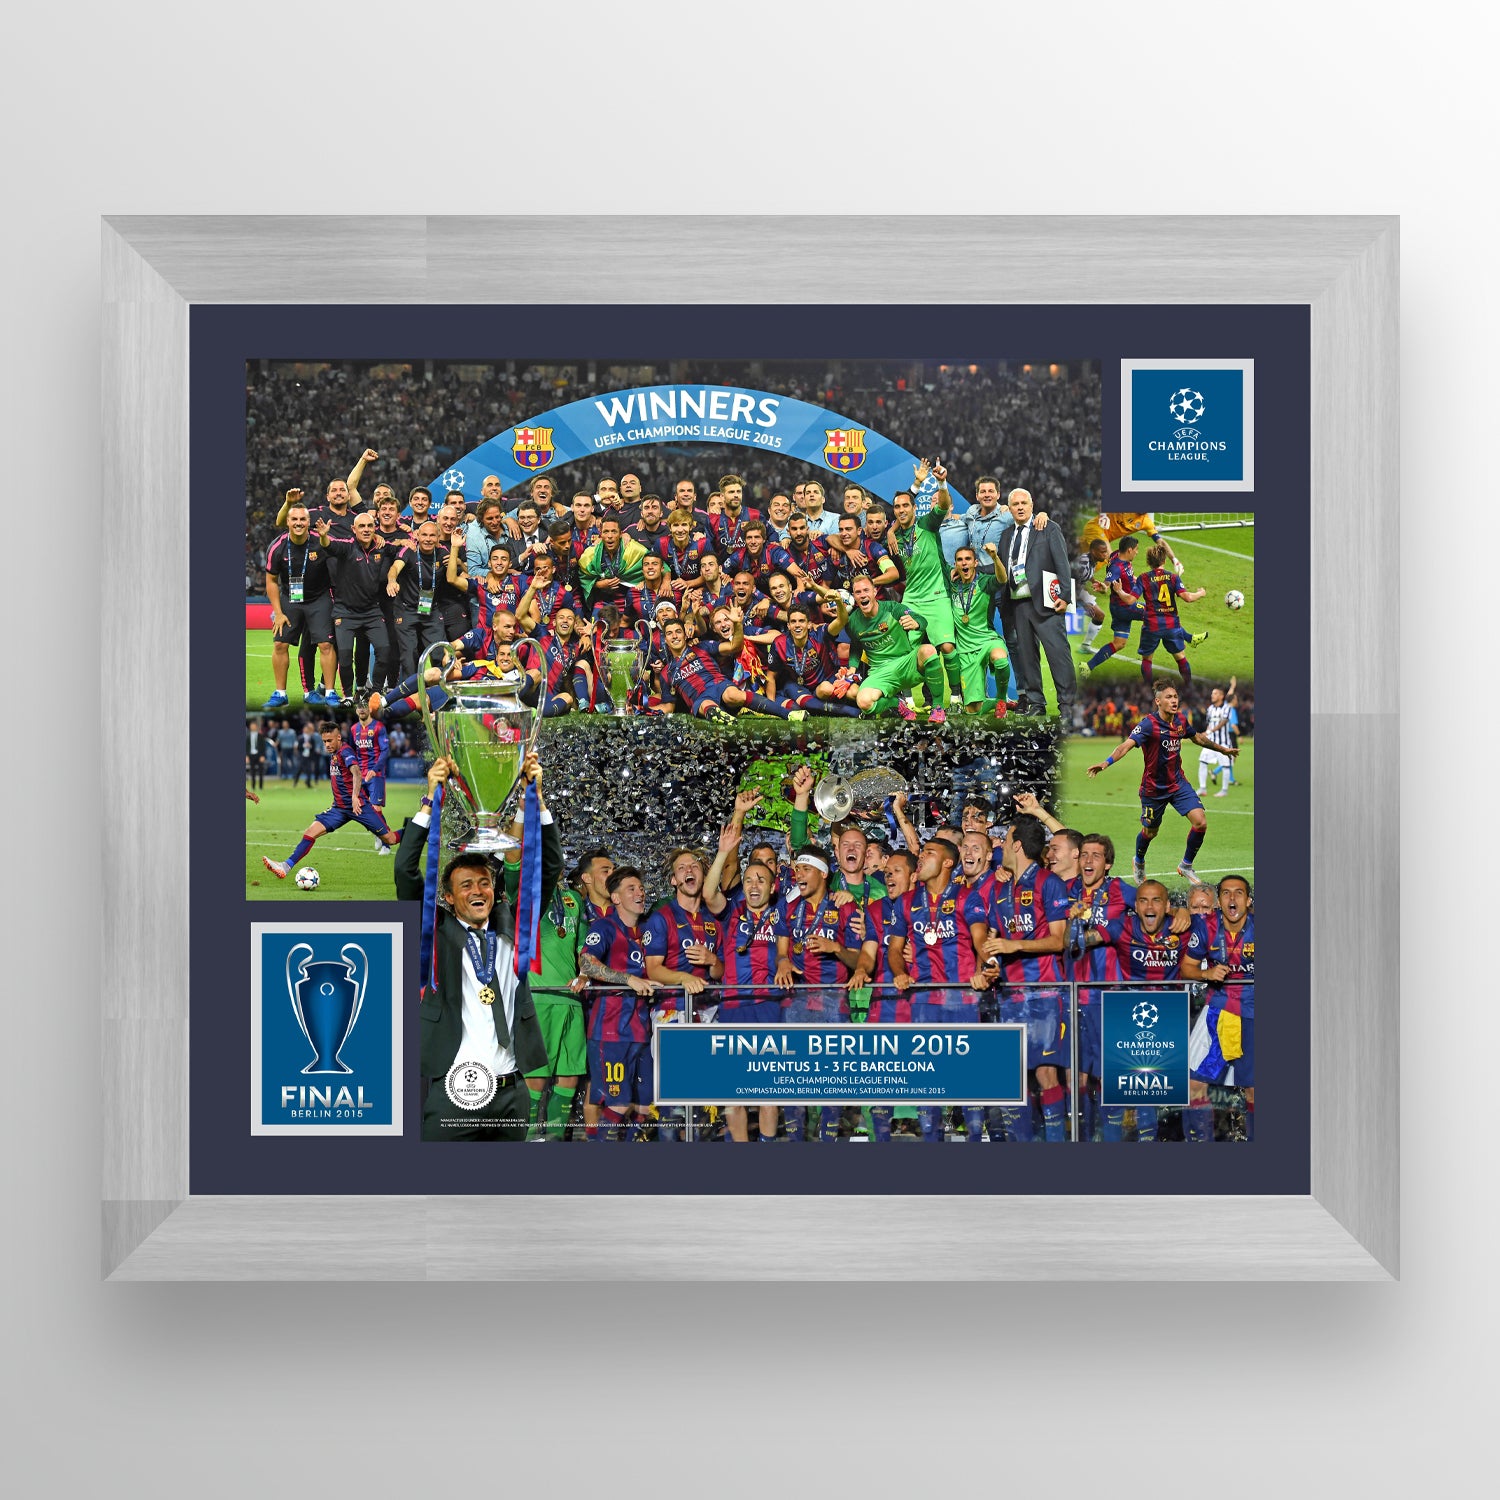 UEFA Champions League 2015 Final - Winner: Barcelona - Trophy Lift UEFA Club Competitions Online Store